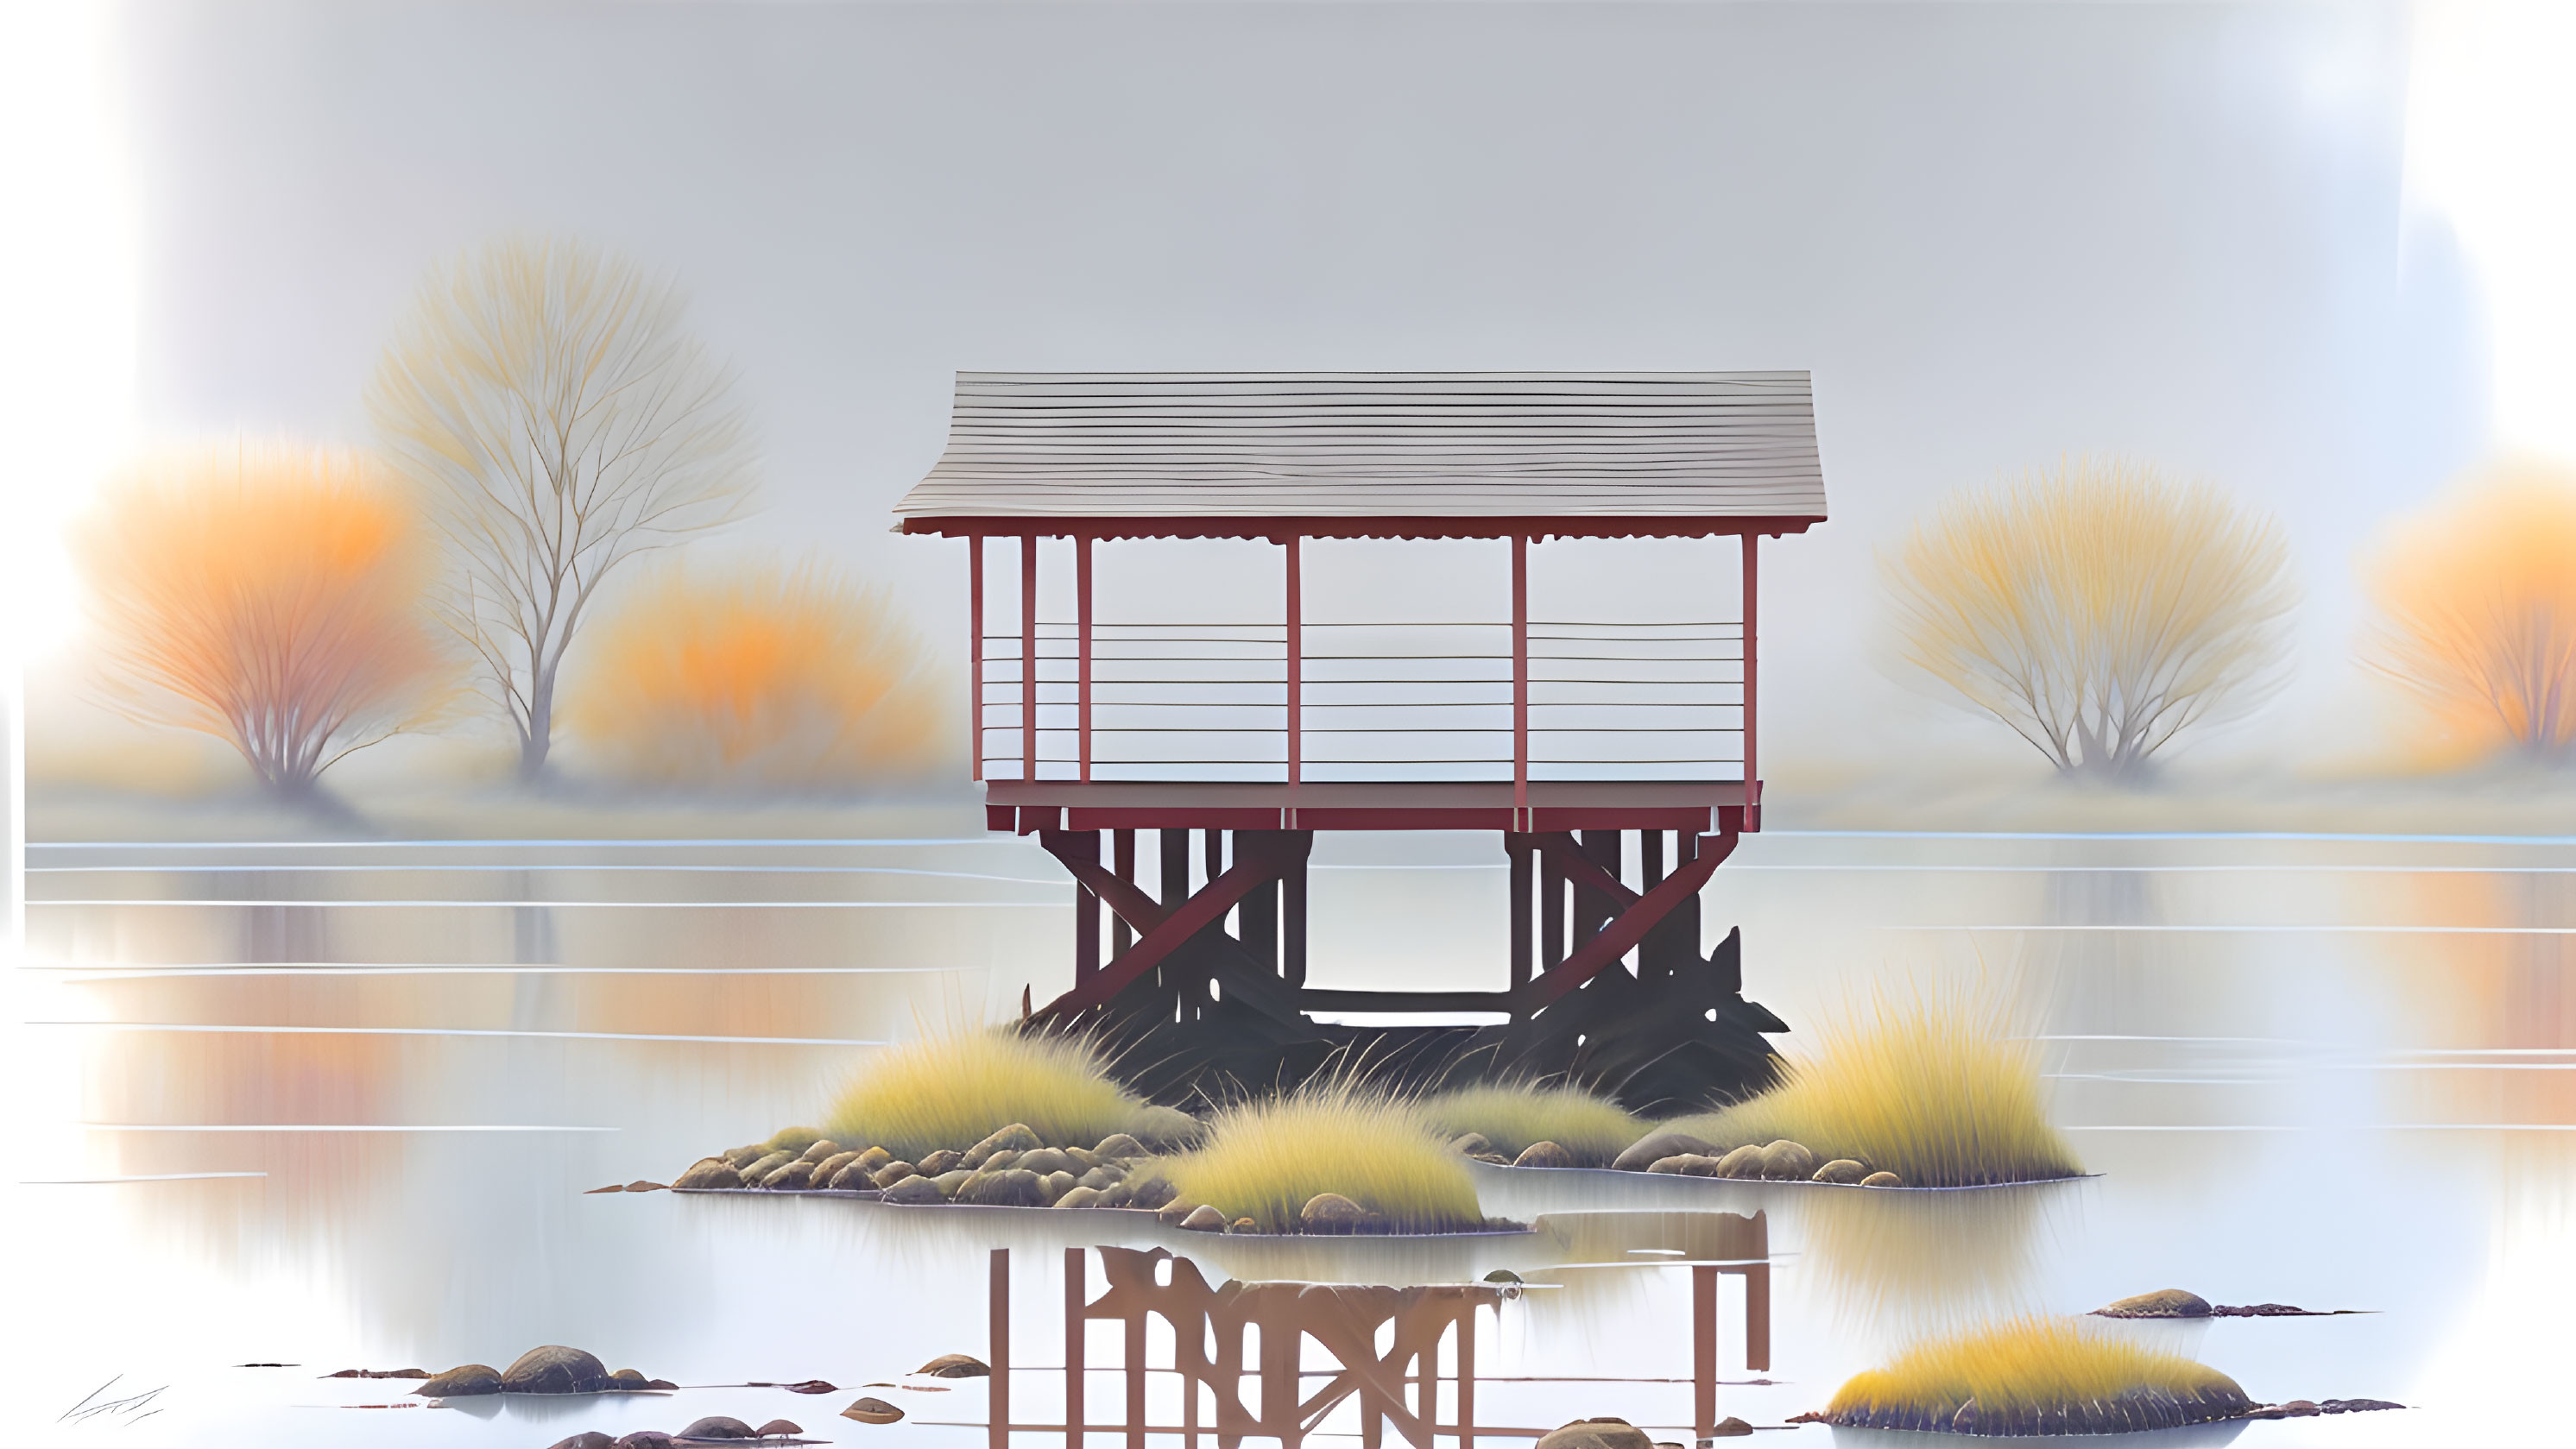 Tranquil lakeside gazebo illustration with autumn scenery